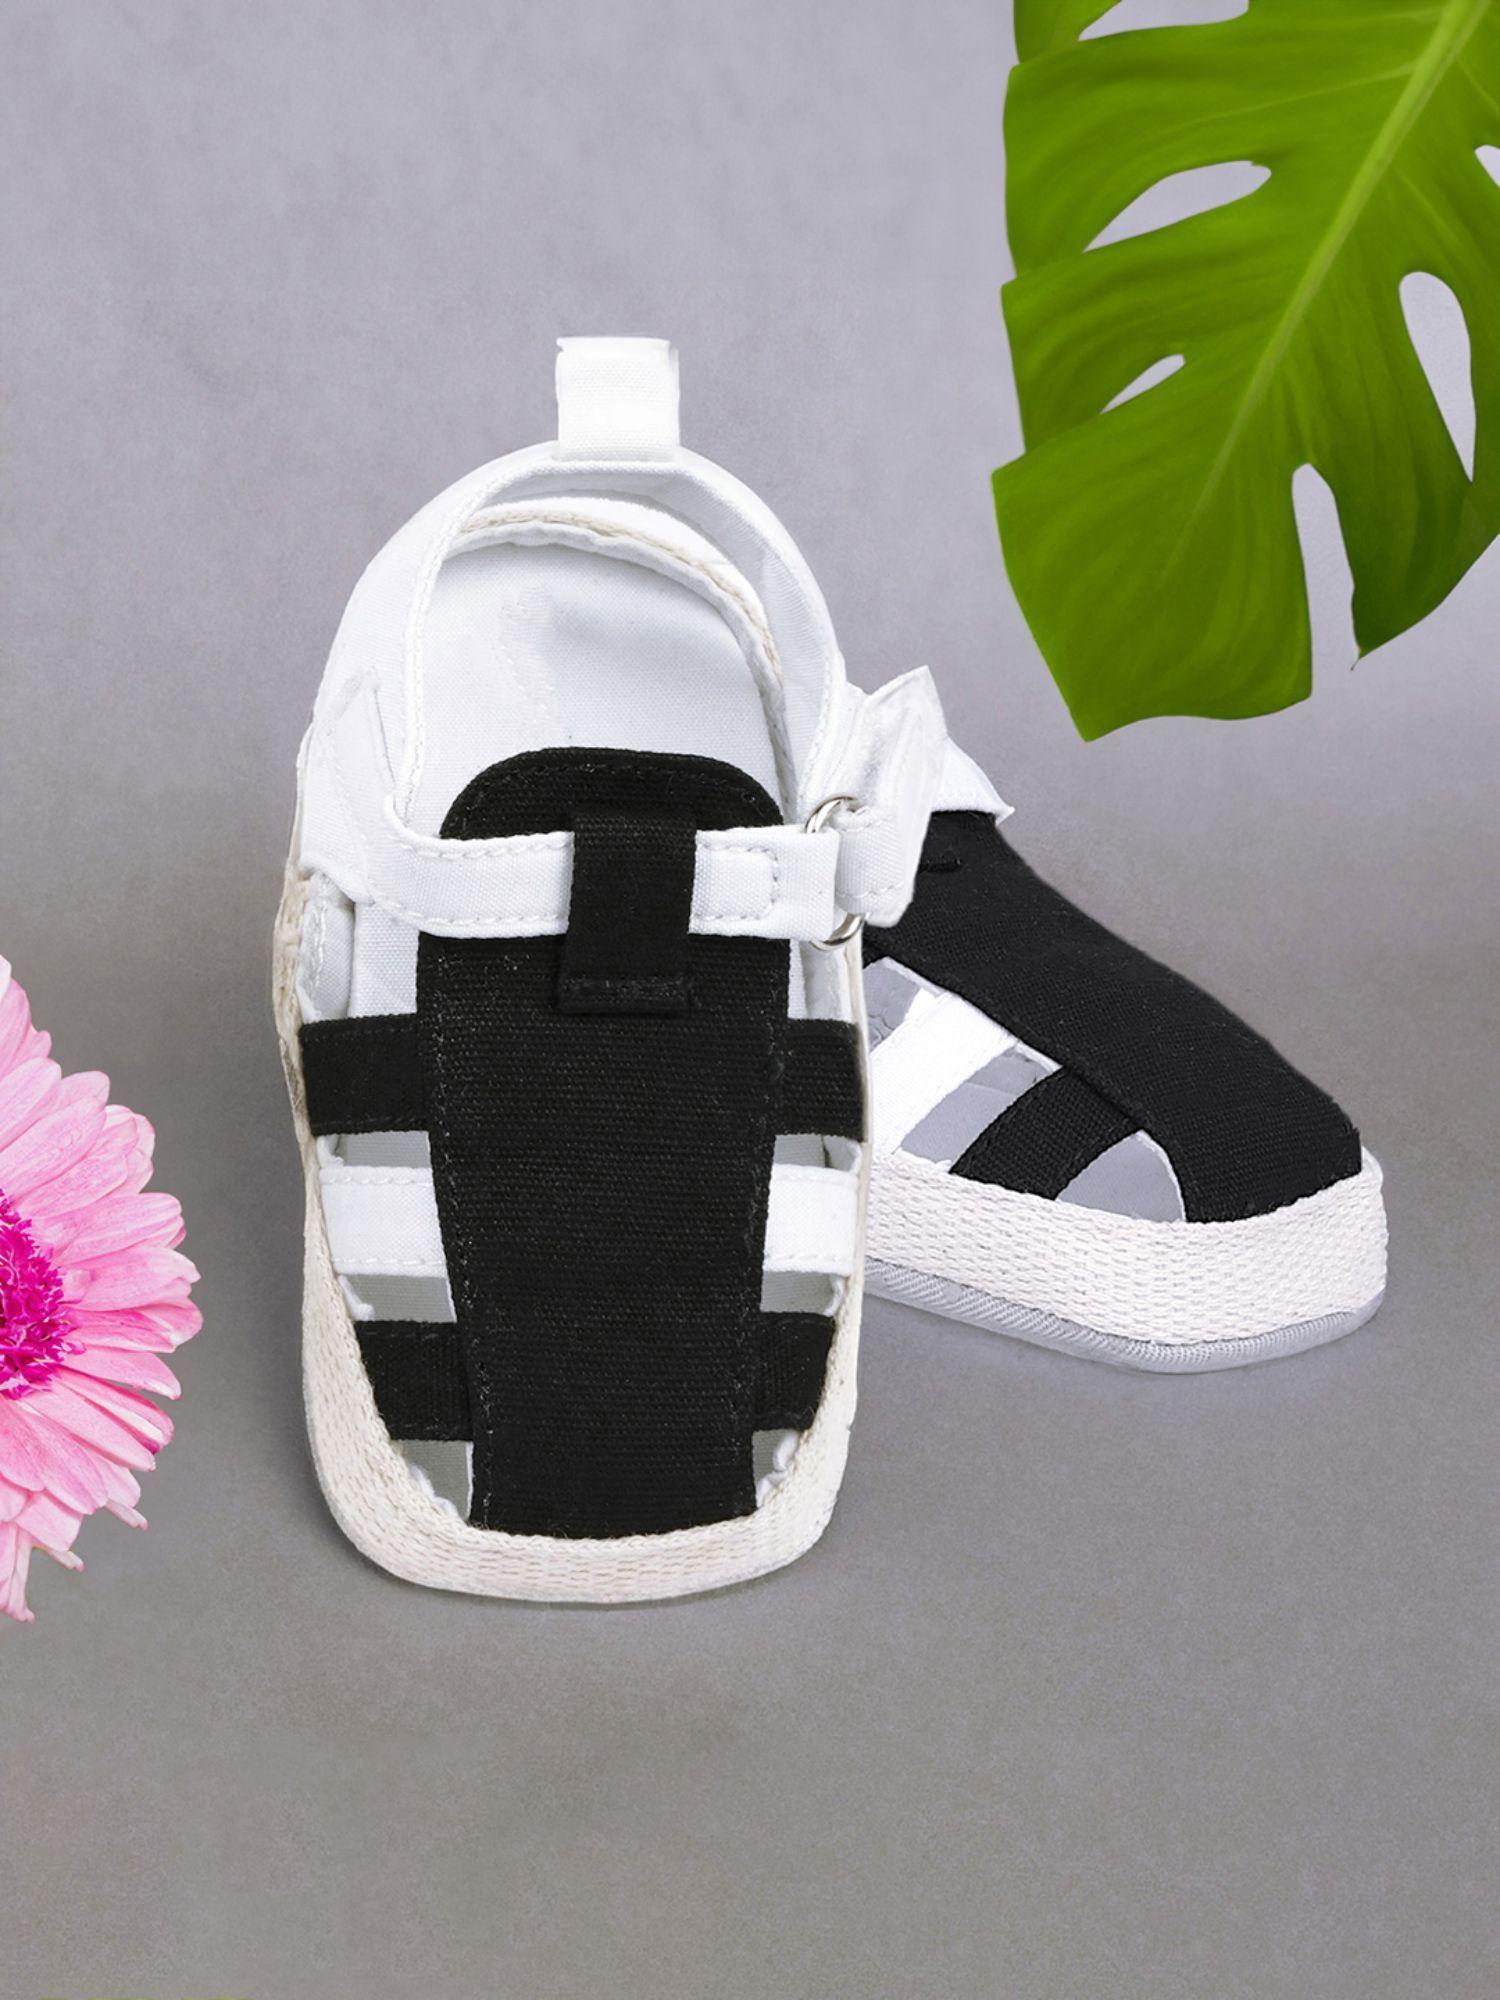 stylish and breathable velcro straps anti-skid sandals - black & white